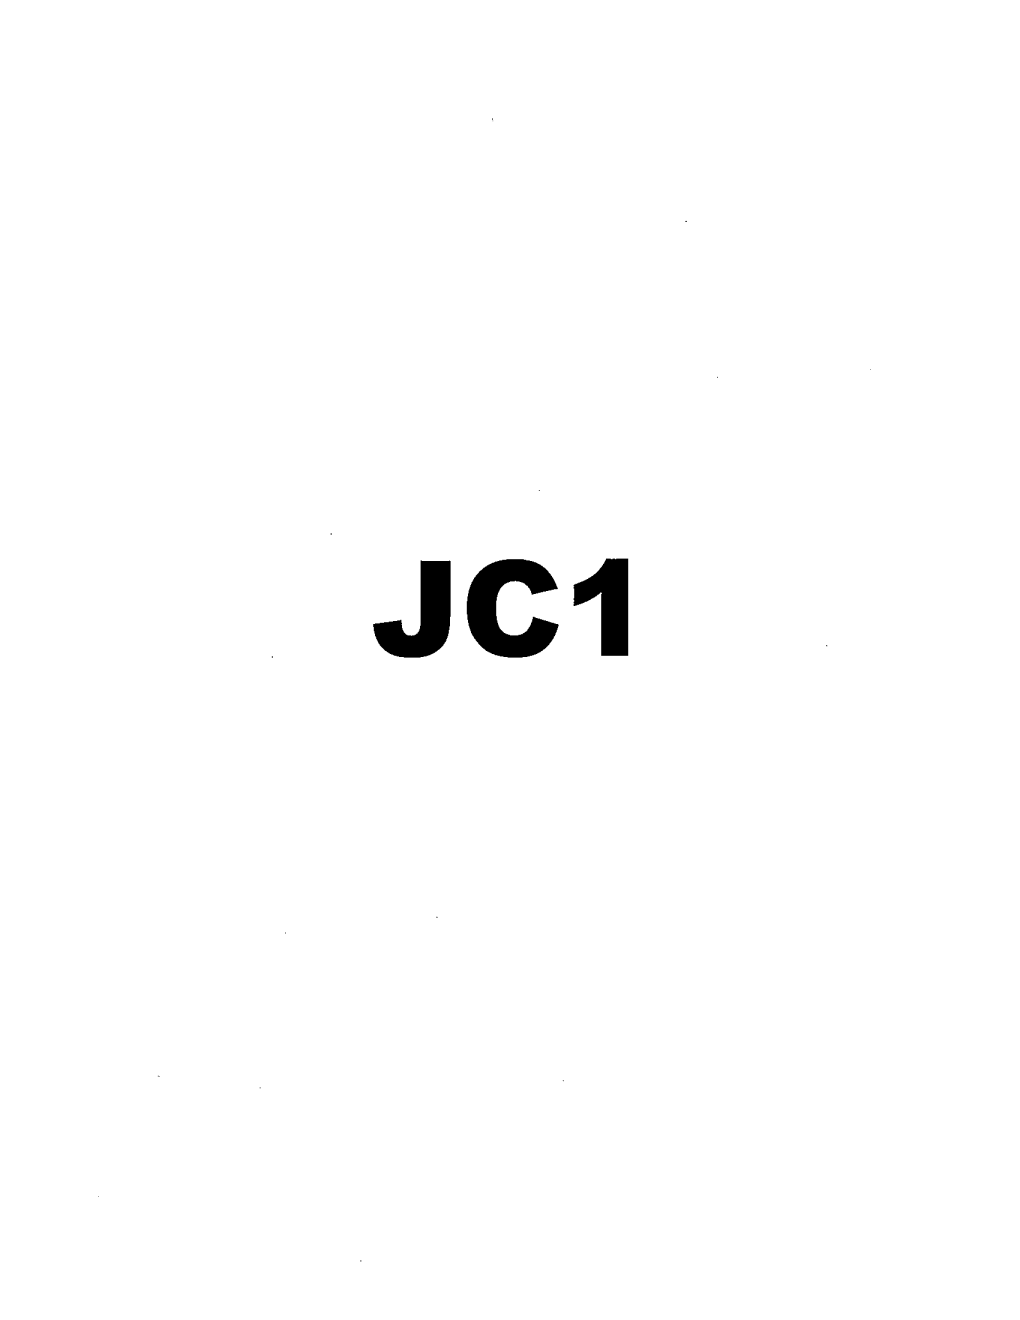 JC1 Testimony